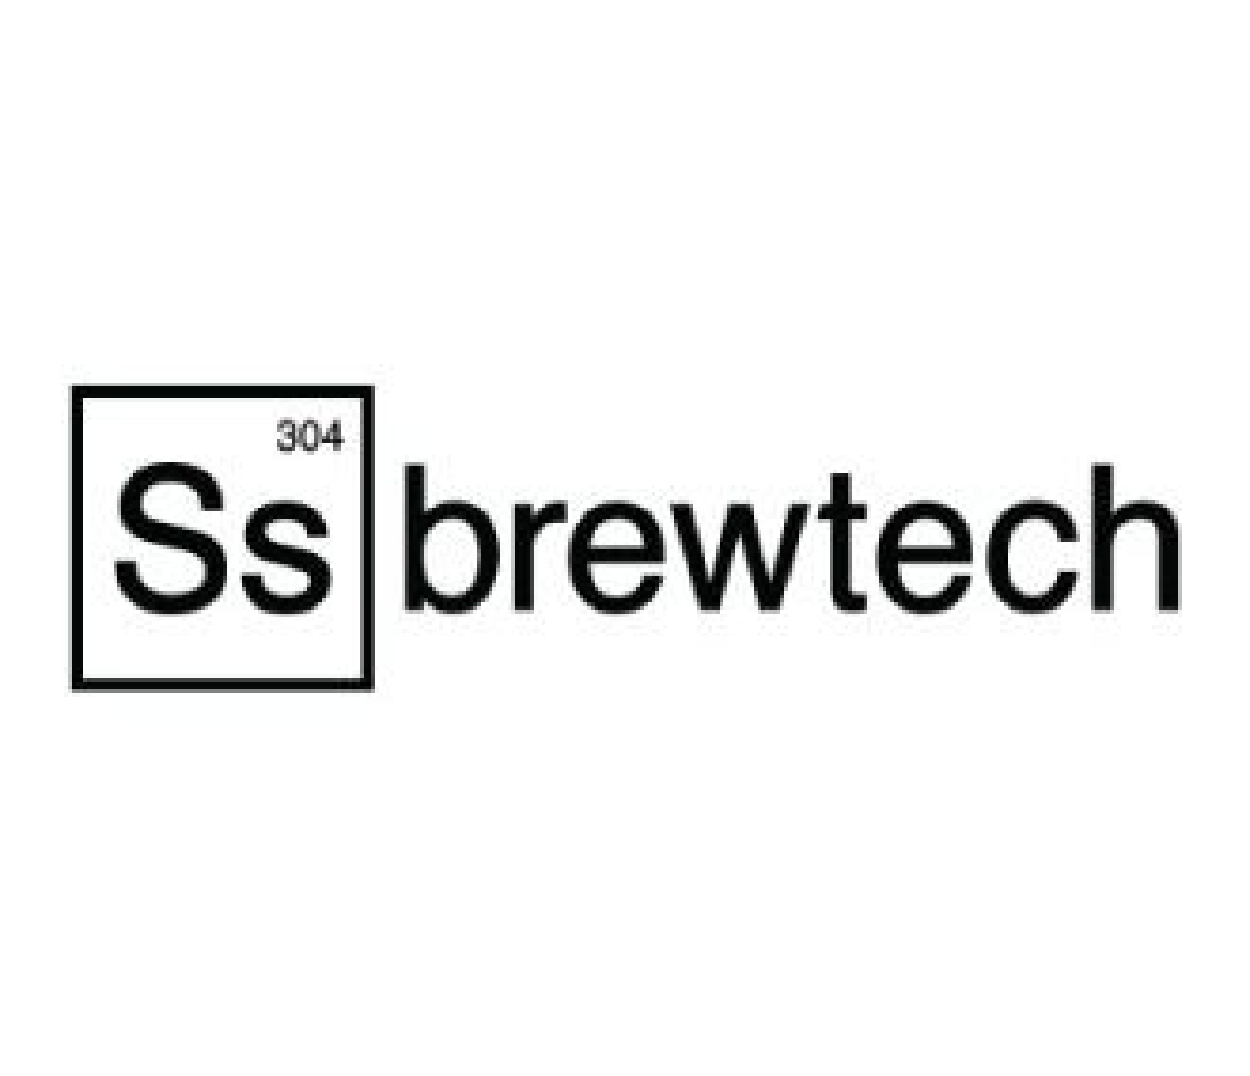 ss-brewtech-mfg-logo.png